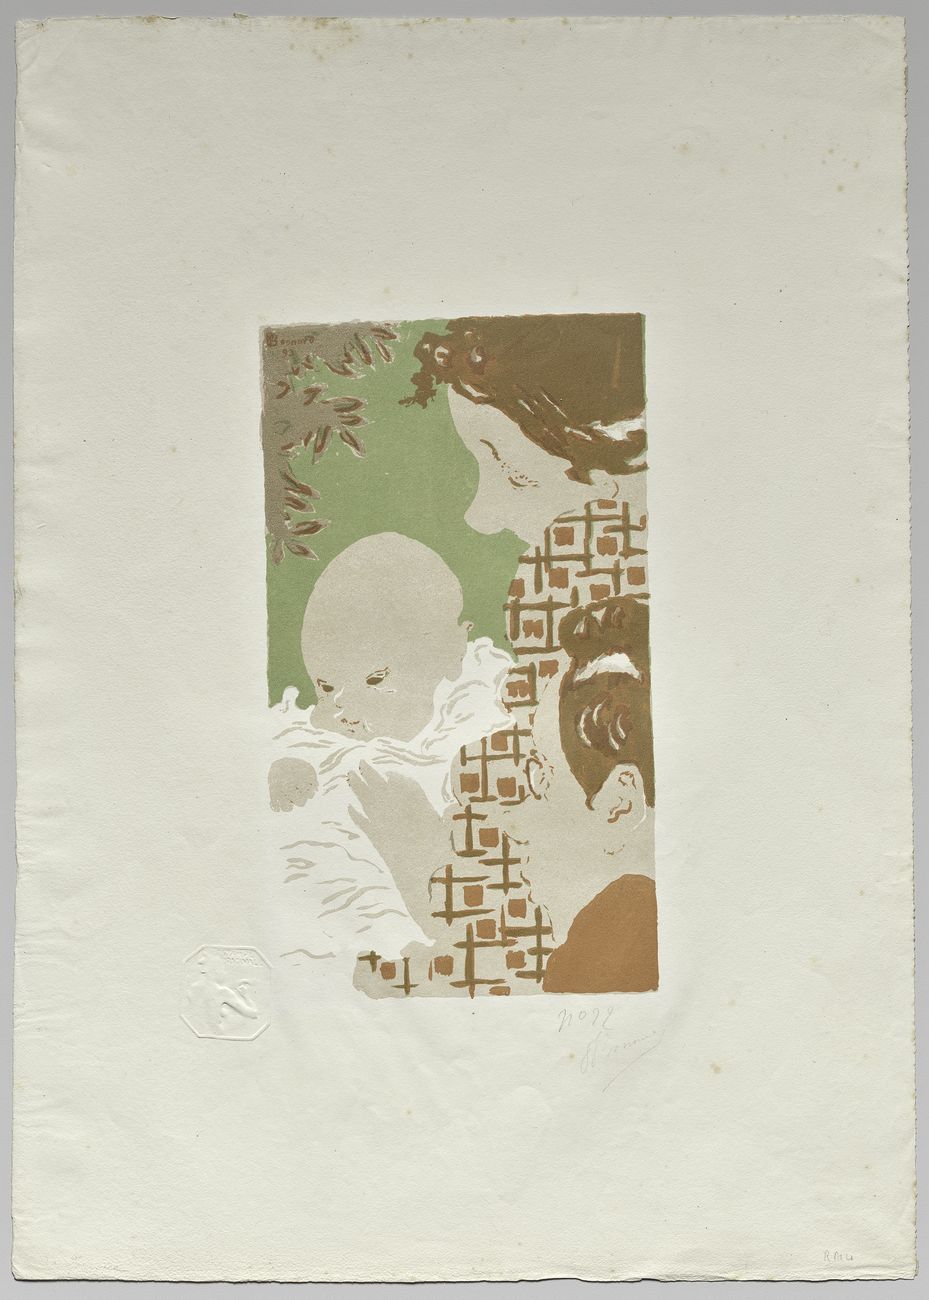 Pierre Bonnard, Scena di famiglia, 1893, litografia a colori su carta, 58x41.5 cm. The Cleveland Museum of Art © 2021 Artists Rights Society (ARS), New York – ADAGP, Paris